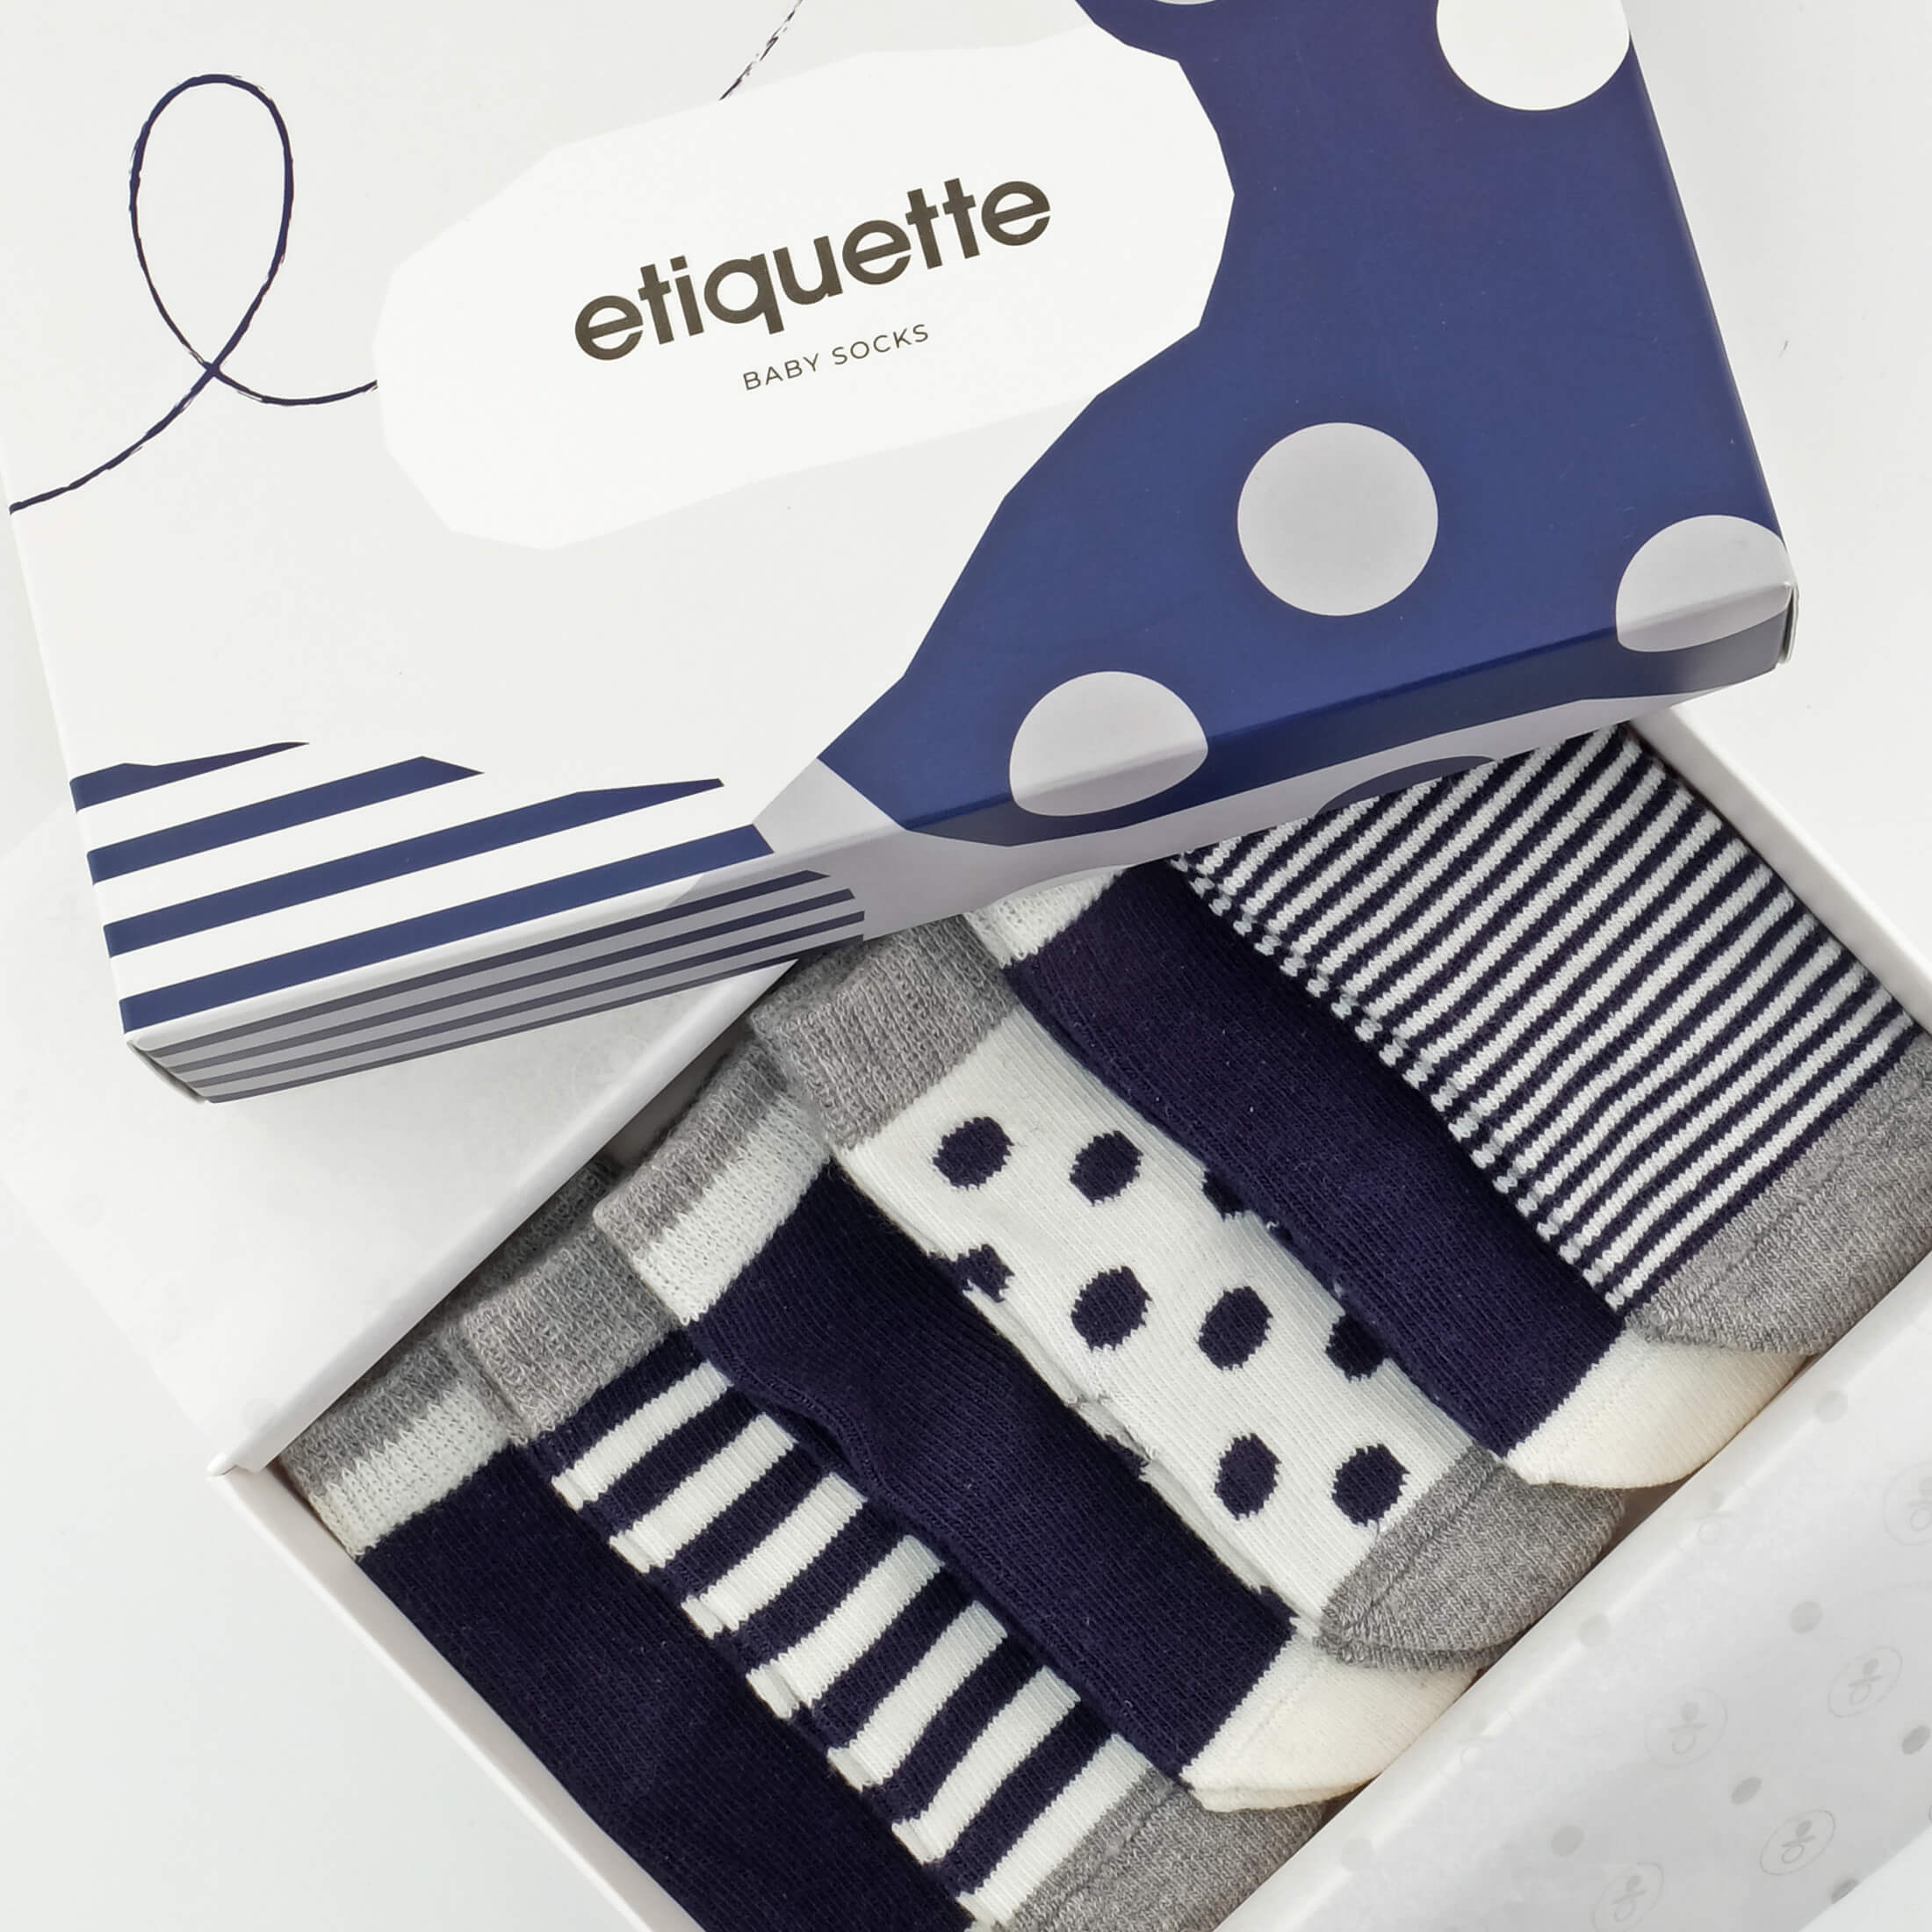 Baby Socks - Classic Sky Baby Socks Gift Box - Blue⎪Etiquette Clothiers